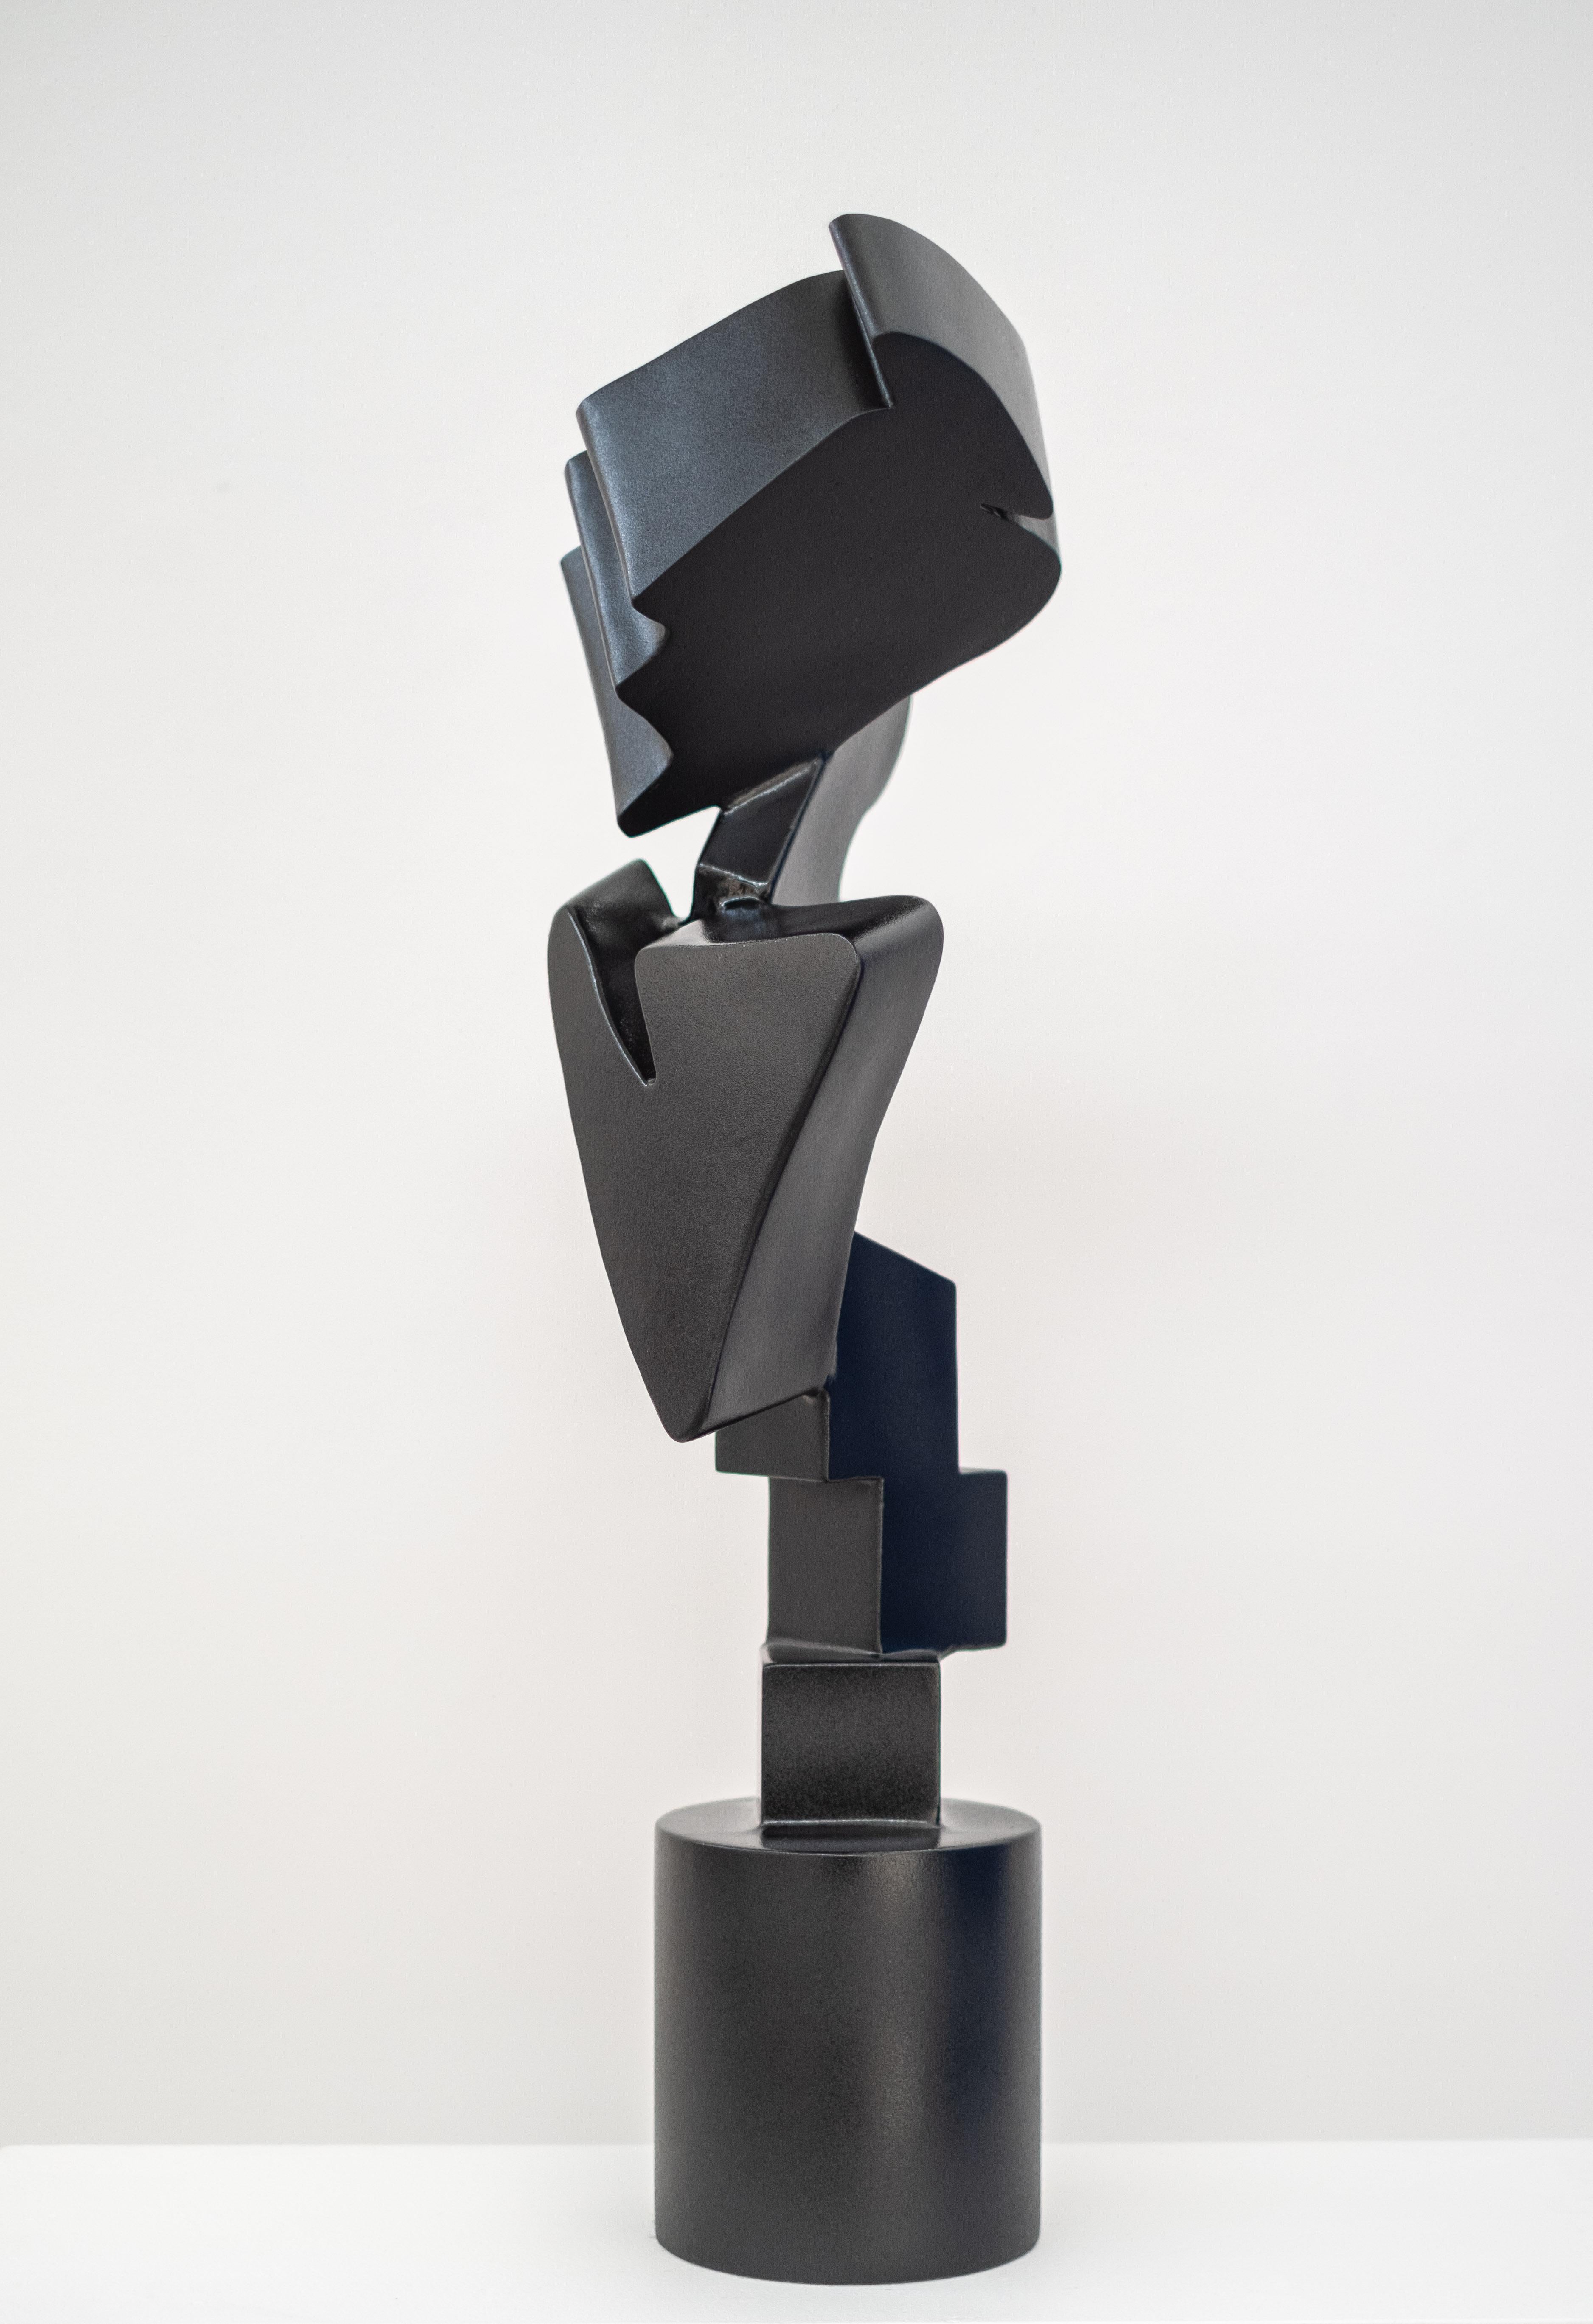 Variant monochrome - abstrait, pop art, sculpture en aluminium peint - Sculpture de Viktor Mitic